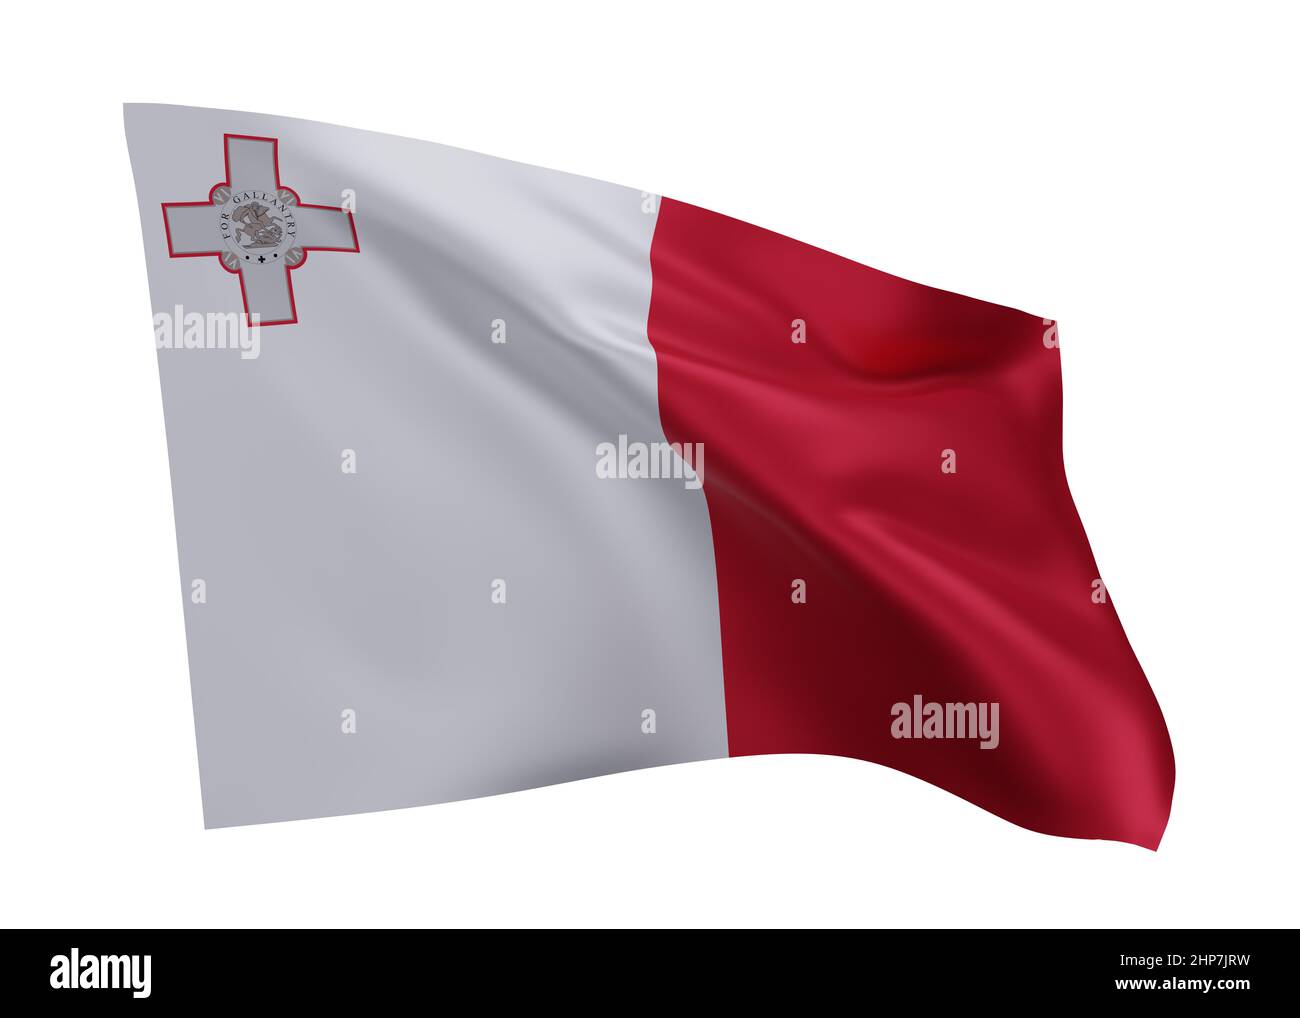 3d illustration flag of Republic of Malta. Maltese high resolution flag isolated against white background. 3d rendering Stock Photo